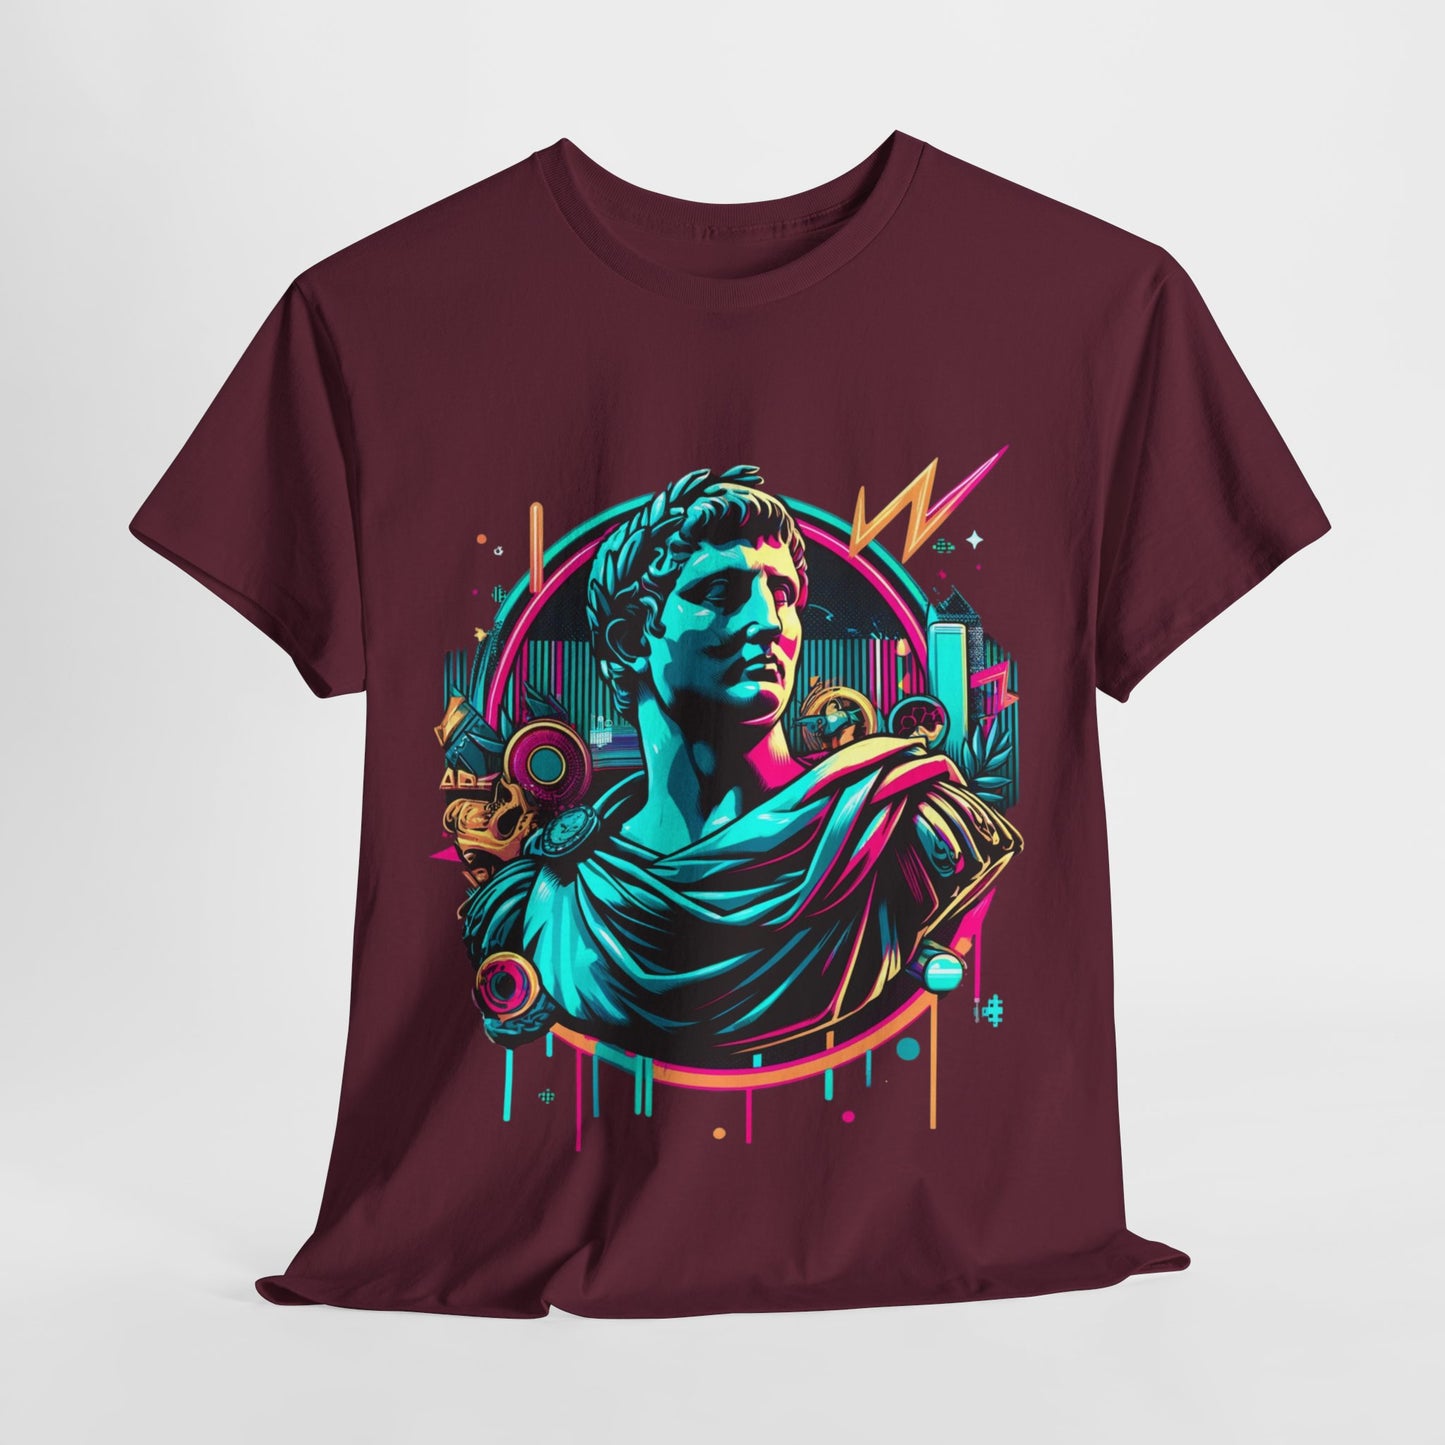 Y.M.L.Y. "Julius Caesar Throwback" T-Shirt Historical T-Shirts Unique T-Shirts Roman General T-Shirts